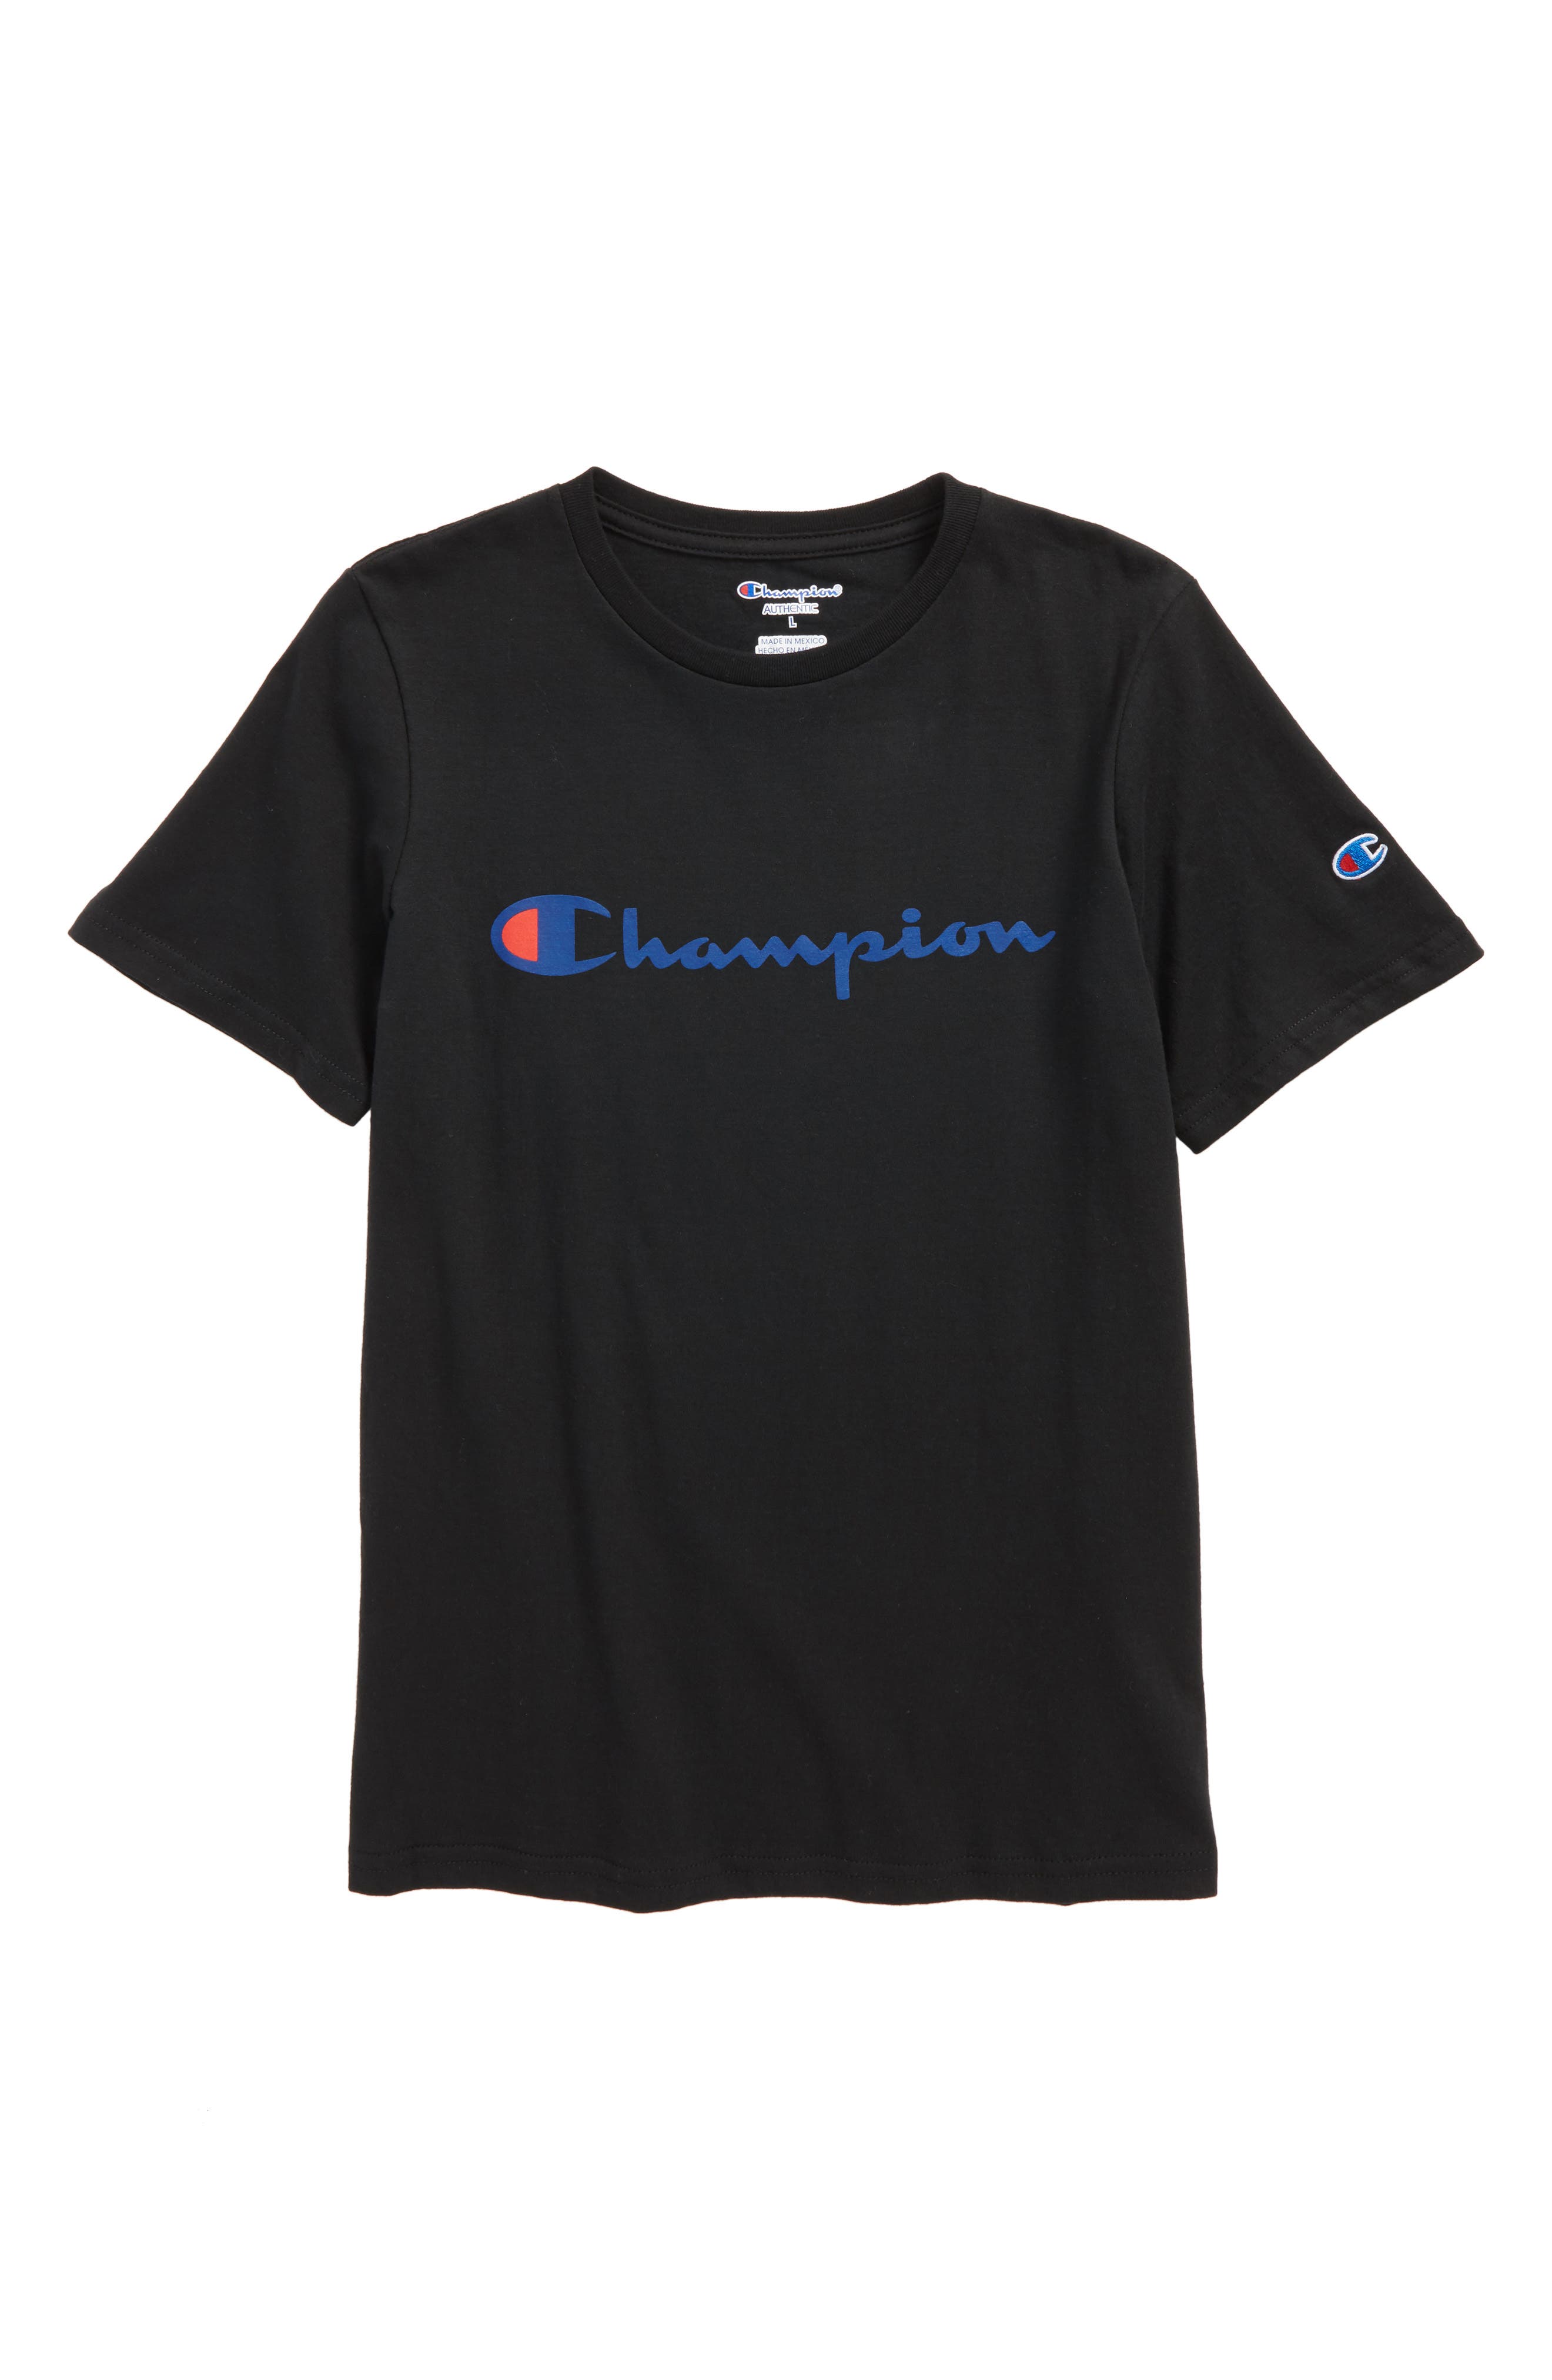 blue and black champion shirt